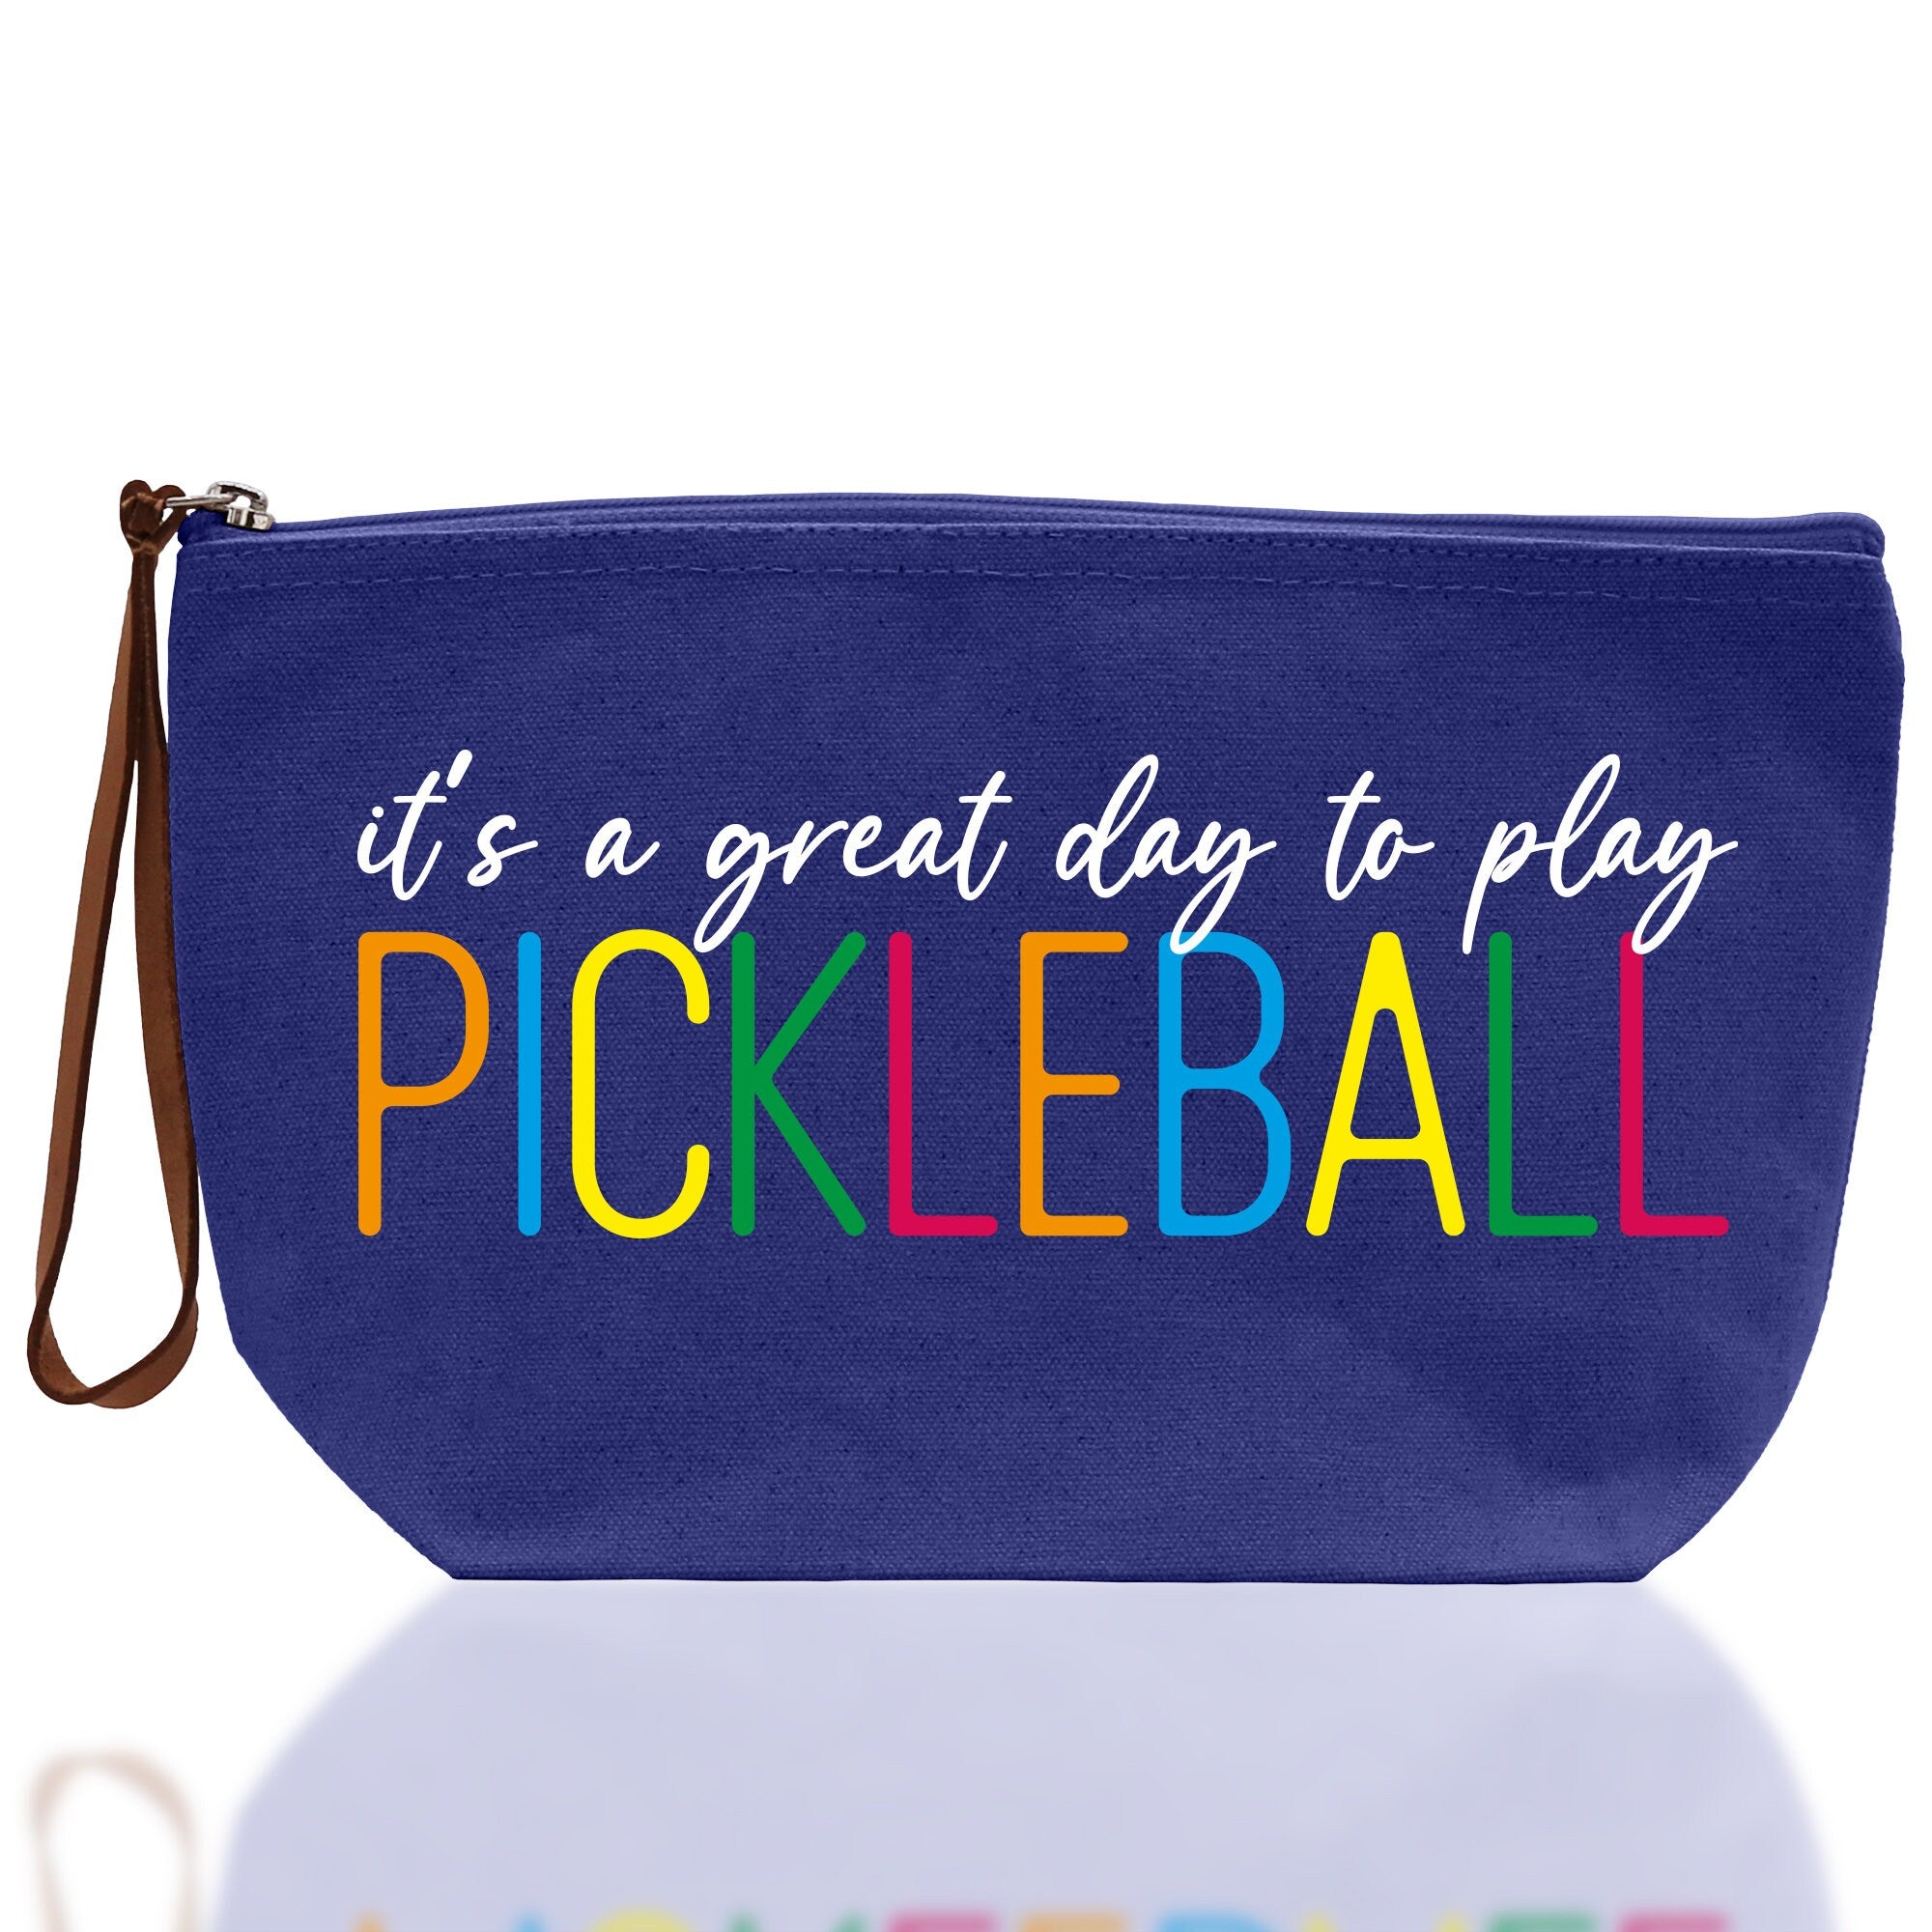 Pickleball Cosmetic Zipper Pouch Tote Bag Pickleball Party Favors Pickleball Player Gift Pickleball Make Up Bag Pickleball Toiletry Bag